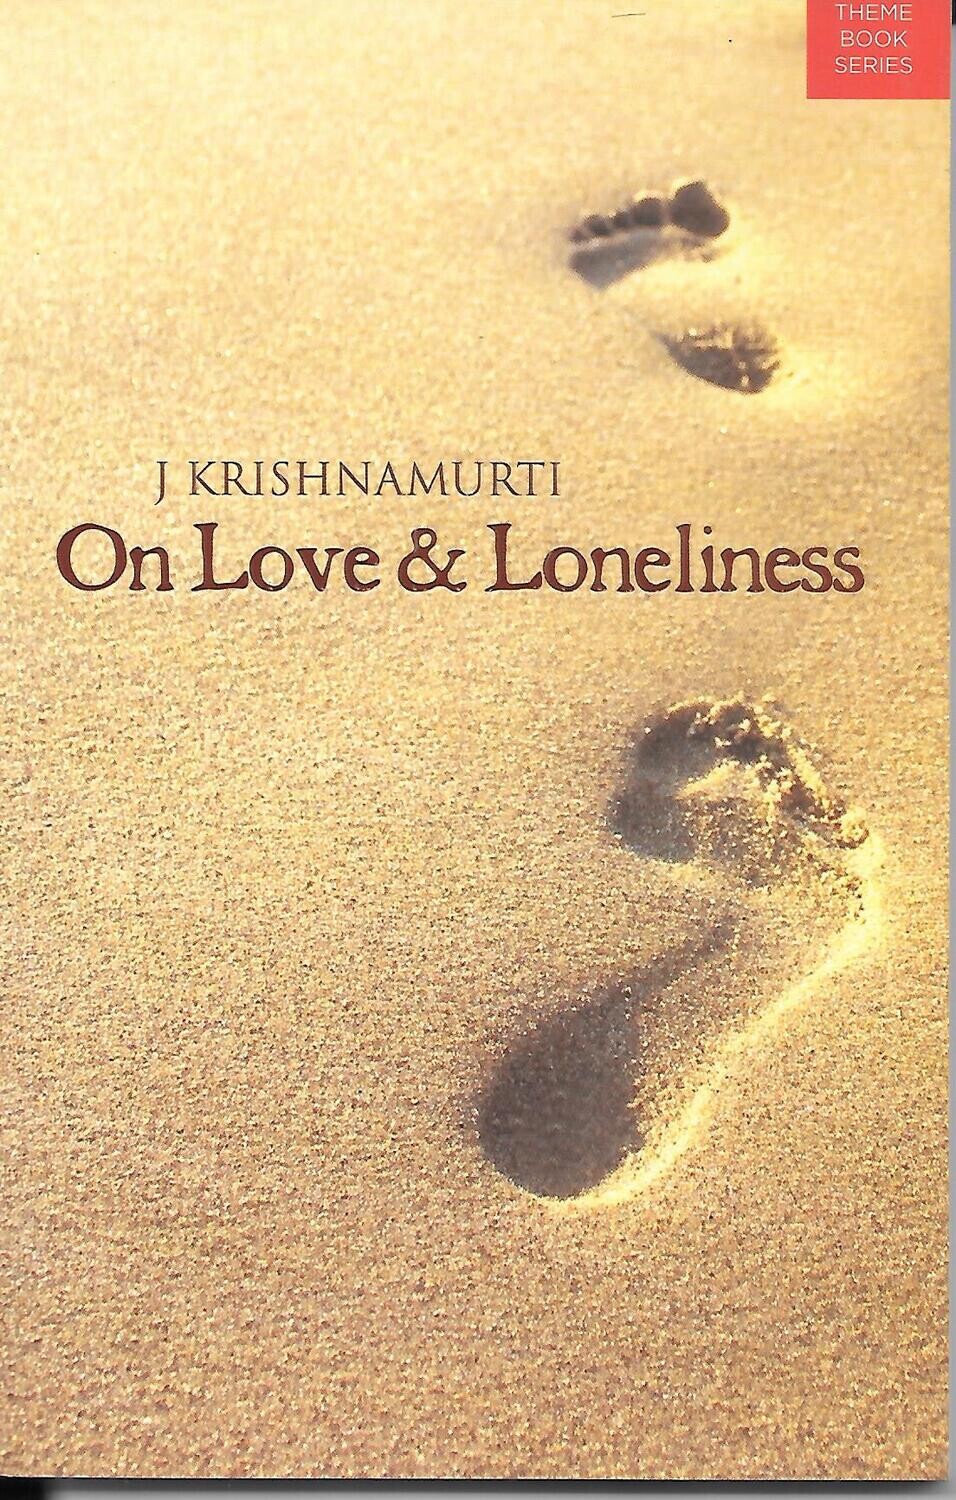 J Krishnamurti On Love and Lonliness